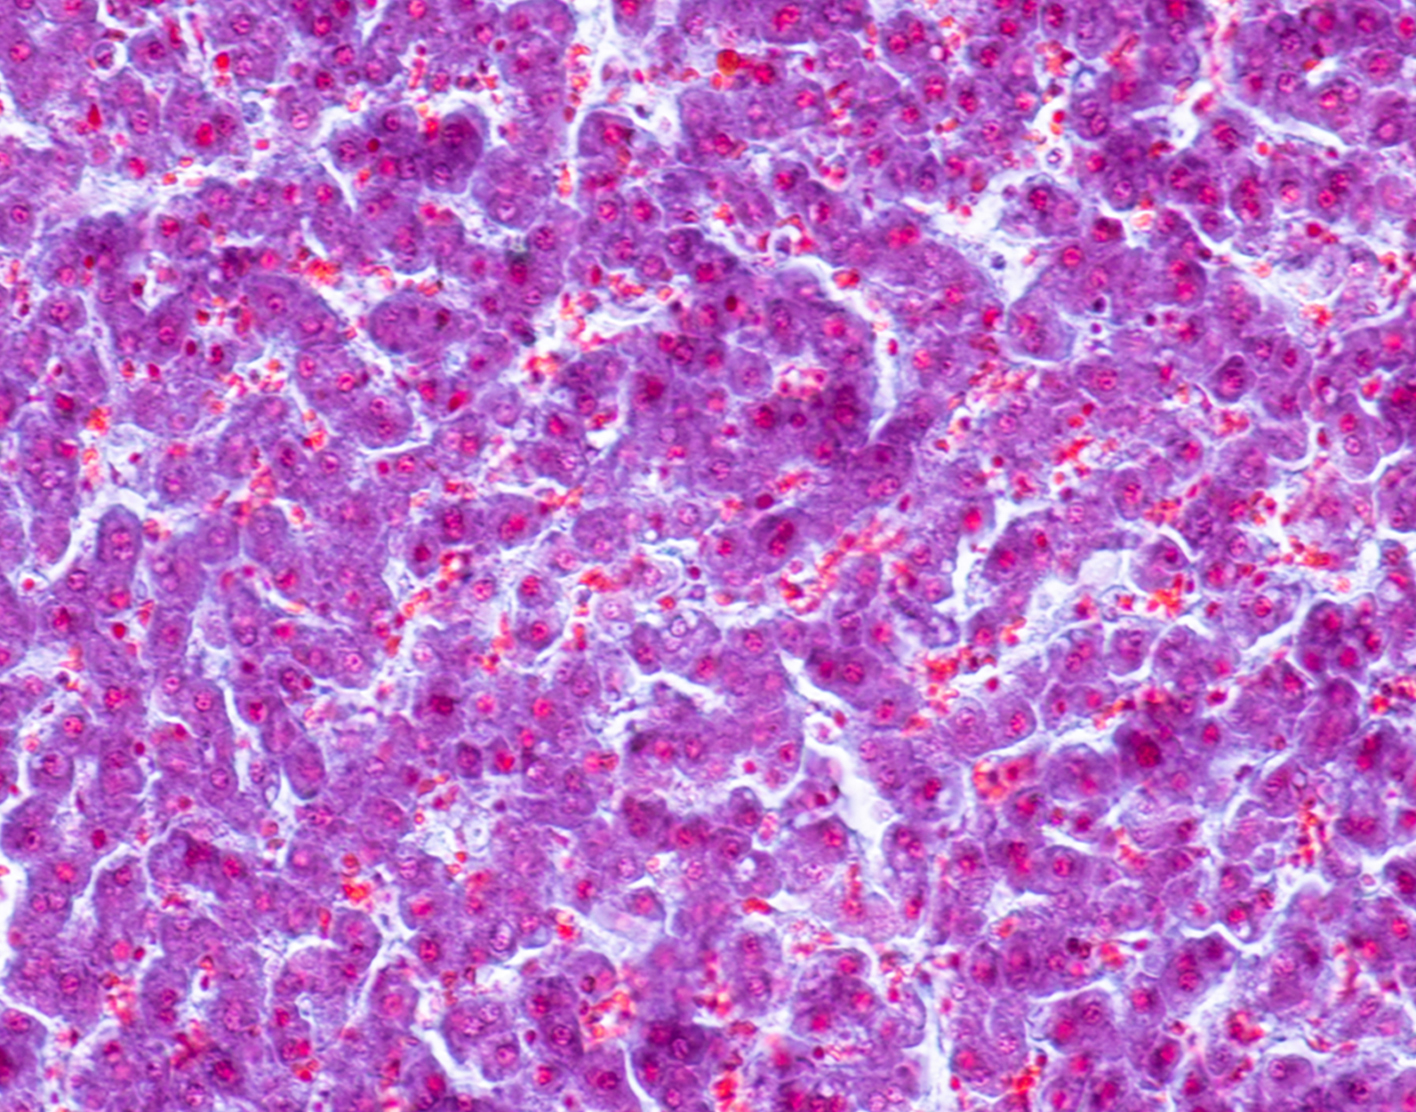 autoimmune-liver-disease-panel-708x556-2x